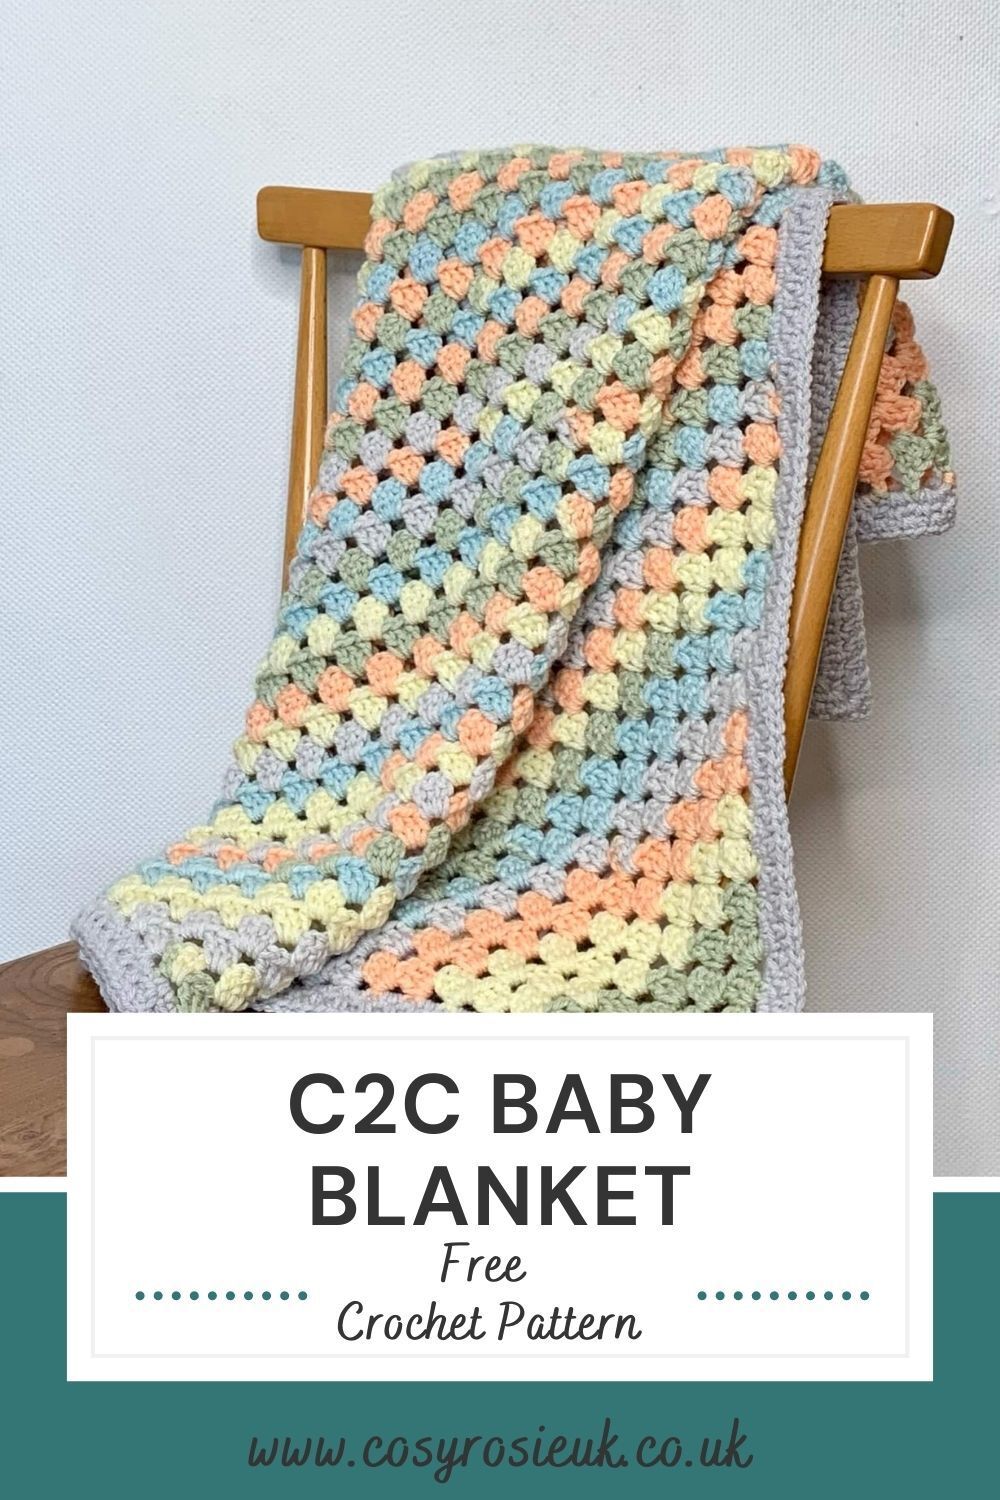 Free C2C Baby blanket crochet pattern